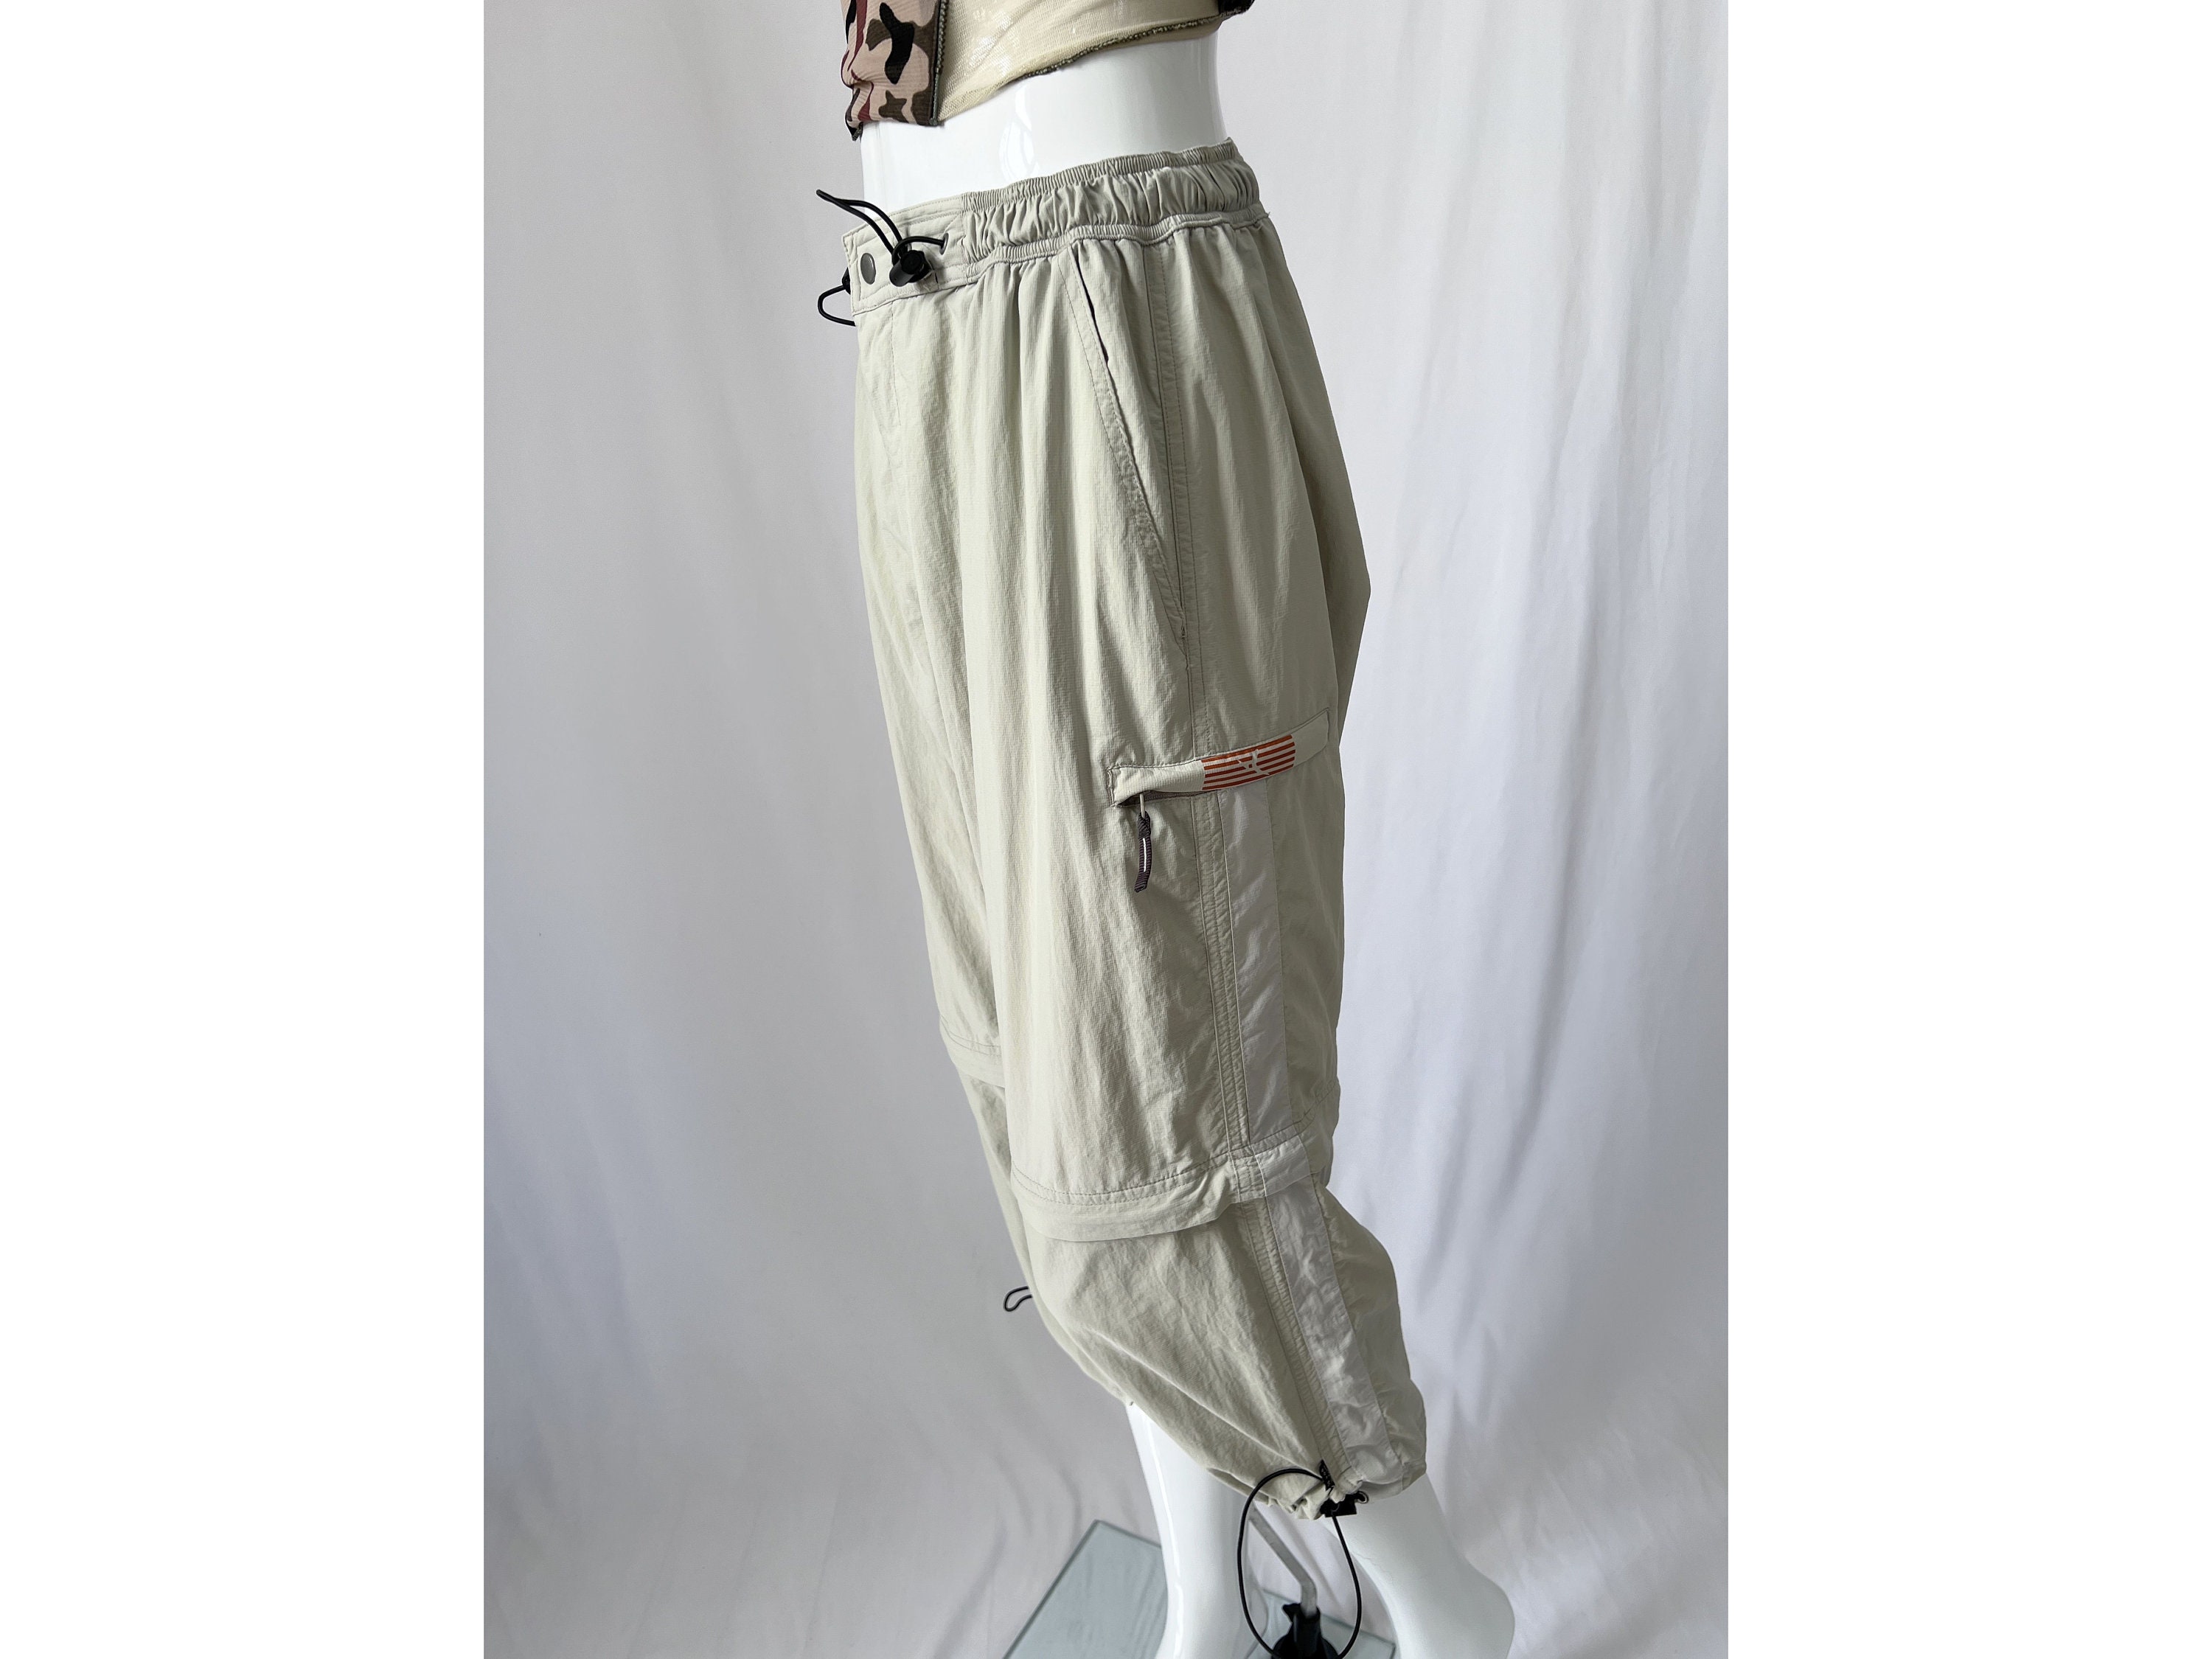 90s Cargo Parachute Pants, Vintage 90s Zip Off Convertible Pants Shorts w/ Elastic Drawstring Waist & Toggle Detail, Gorpcore, Size S-M